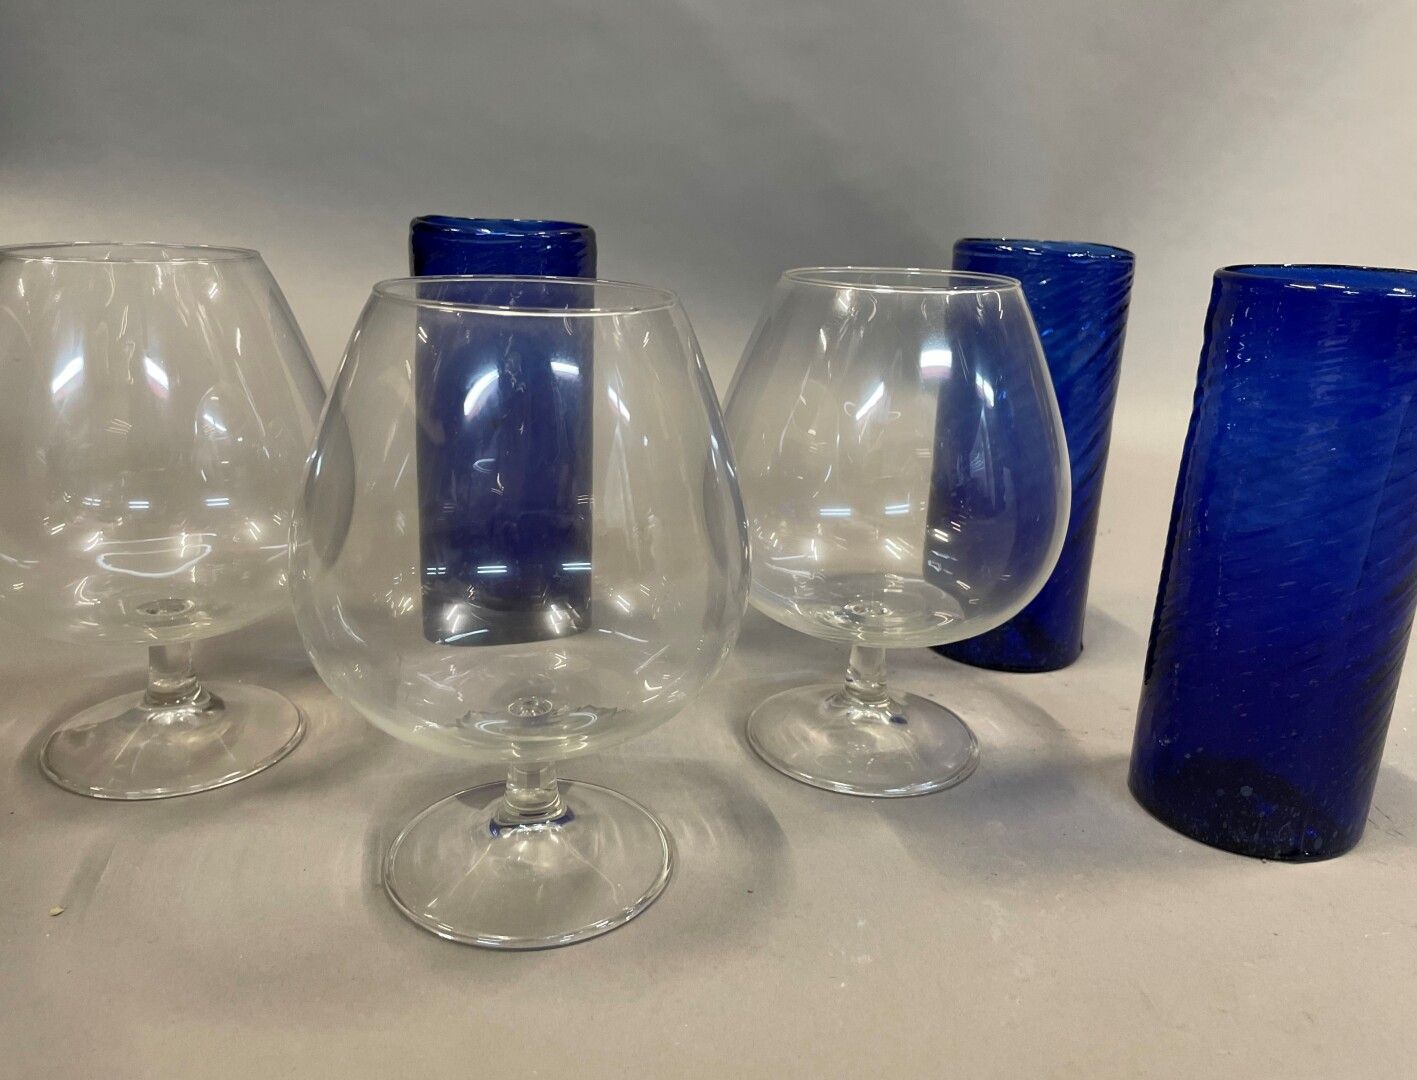 Null Set of 12 glass cognac glasses and 12 blue bubble glass orangeade glasses.